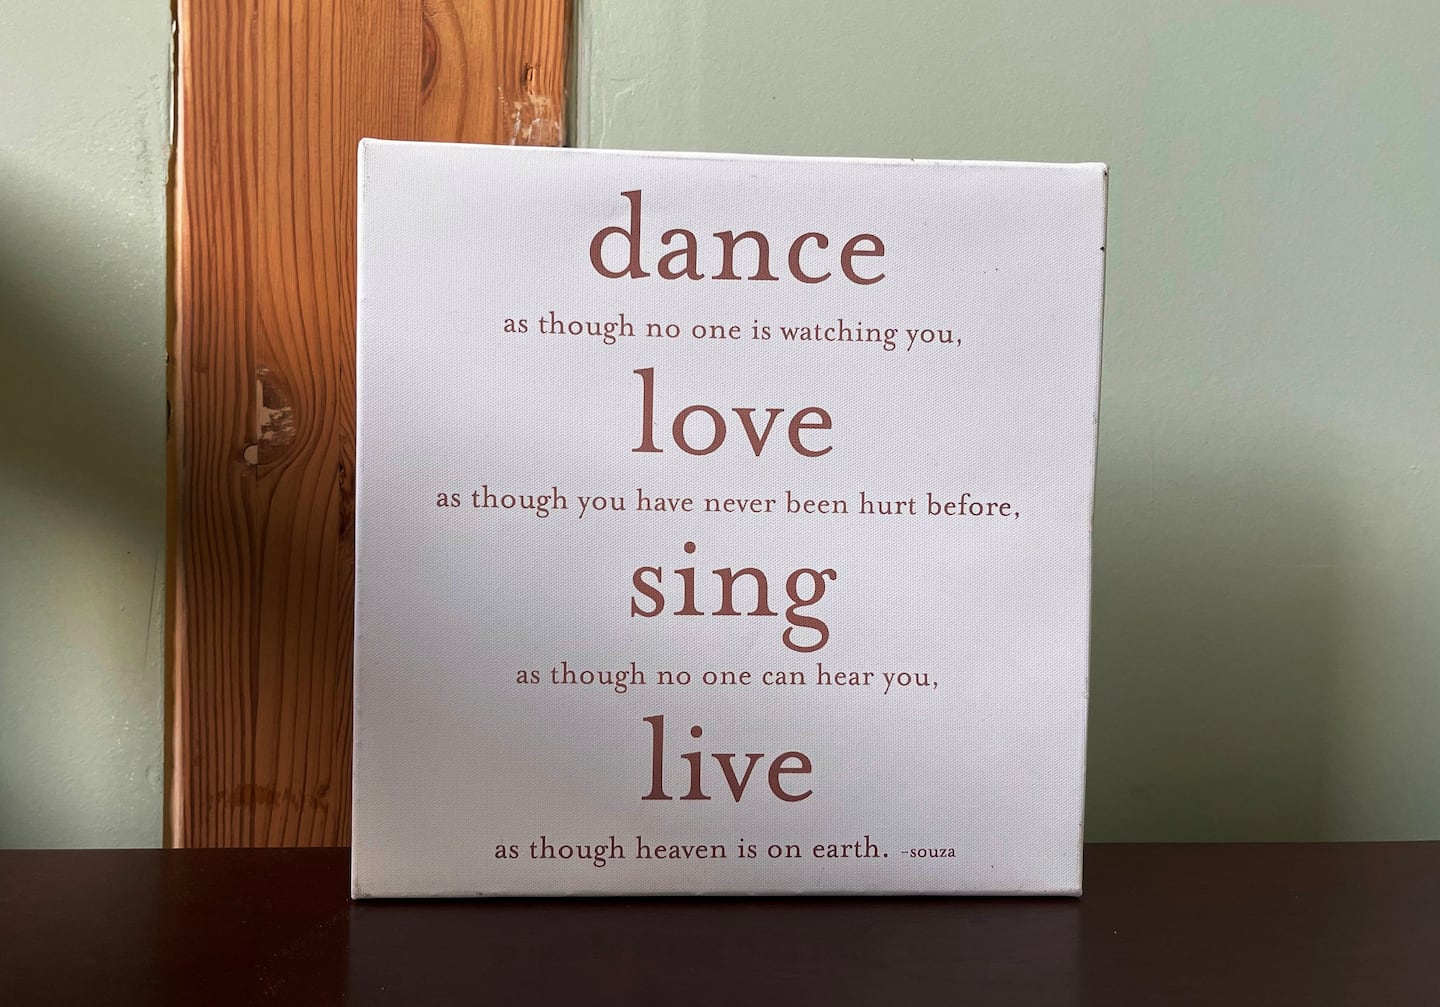 Dance, love, sing, live! Just enjoy life!